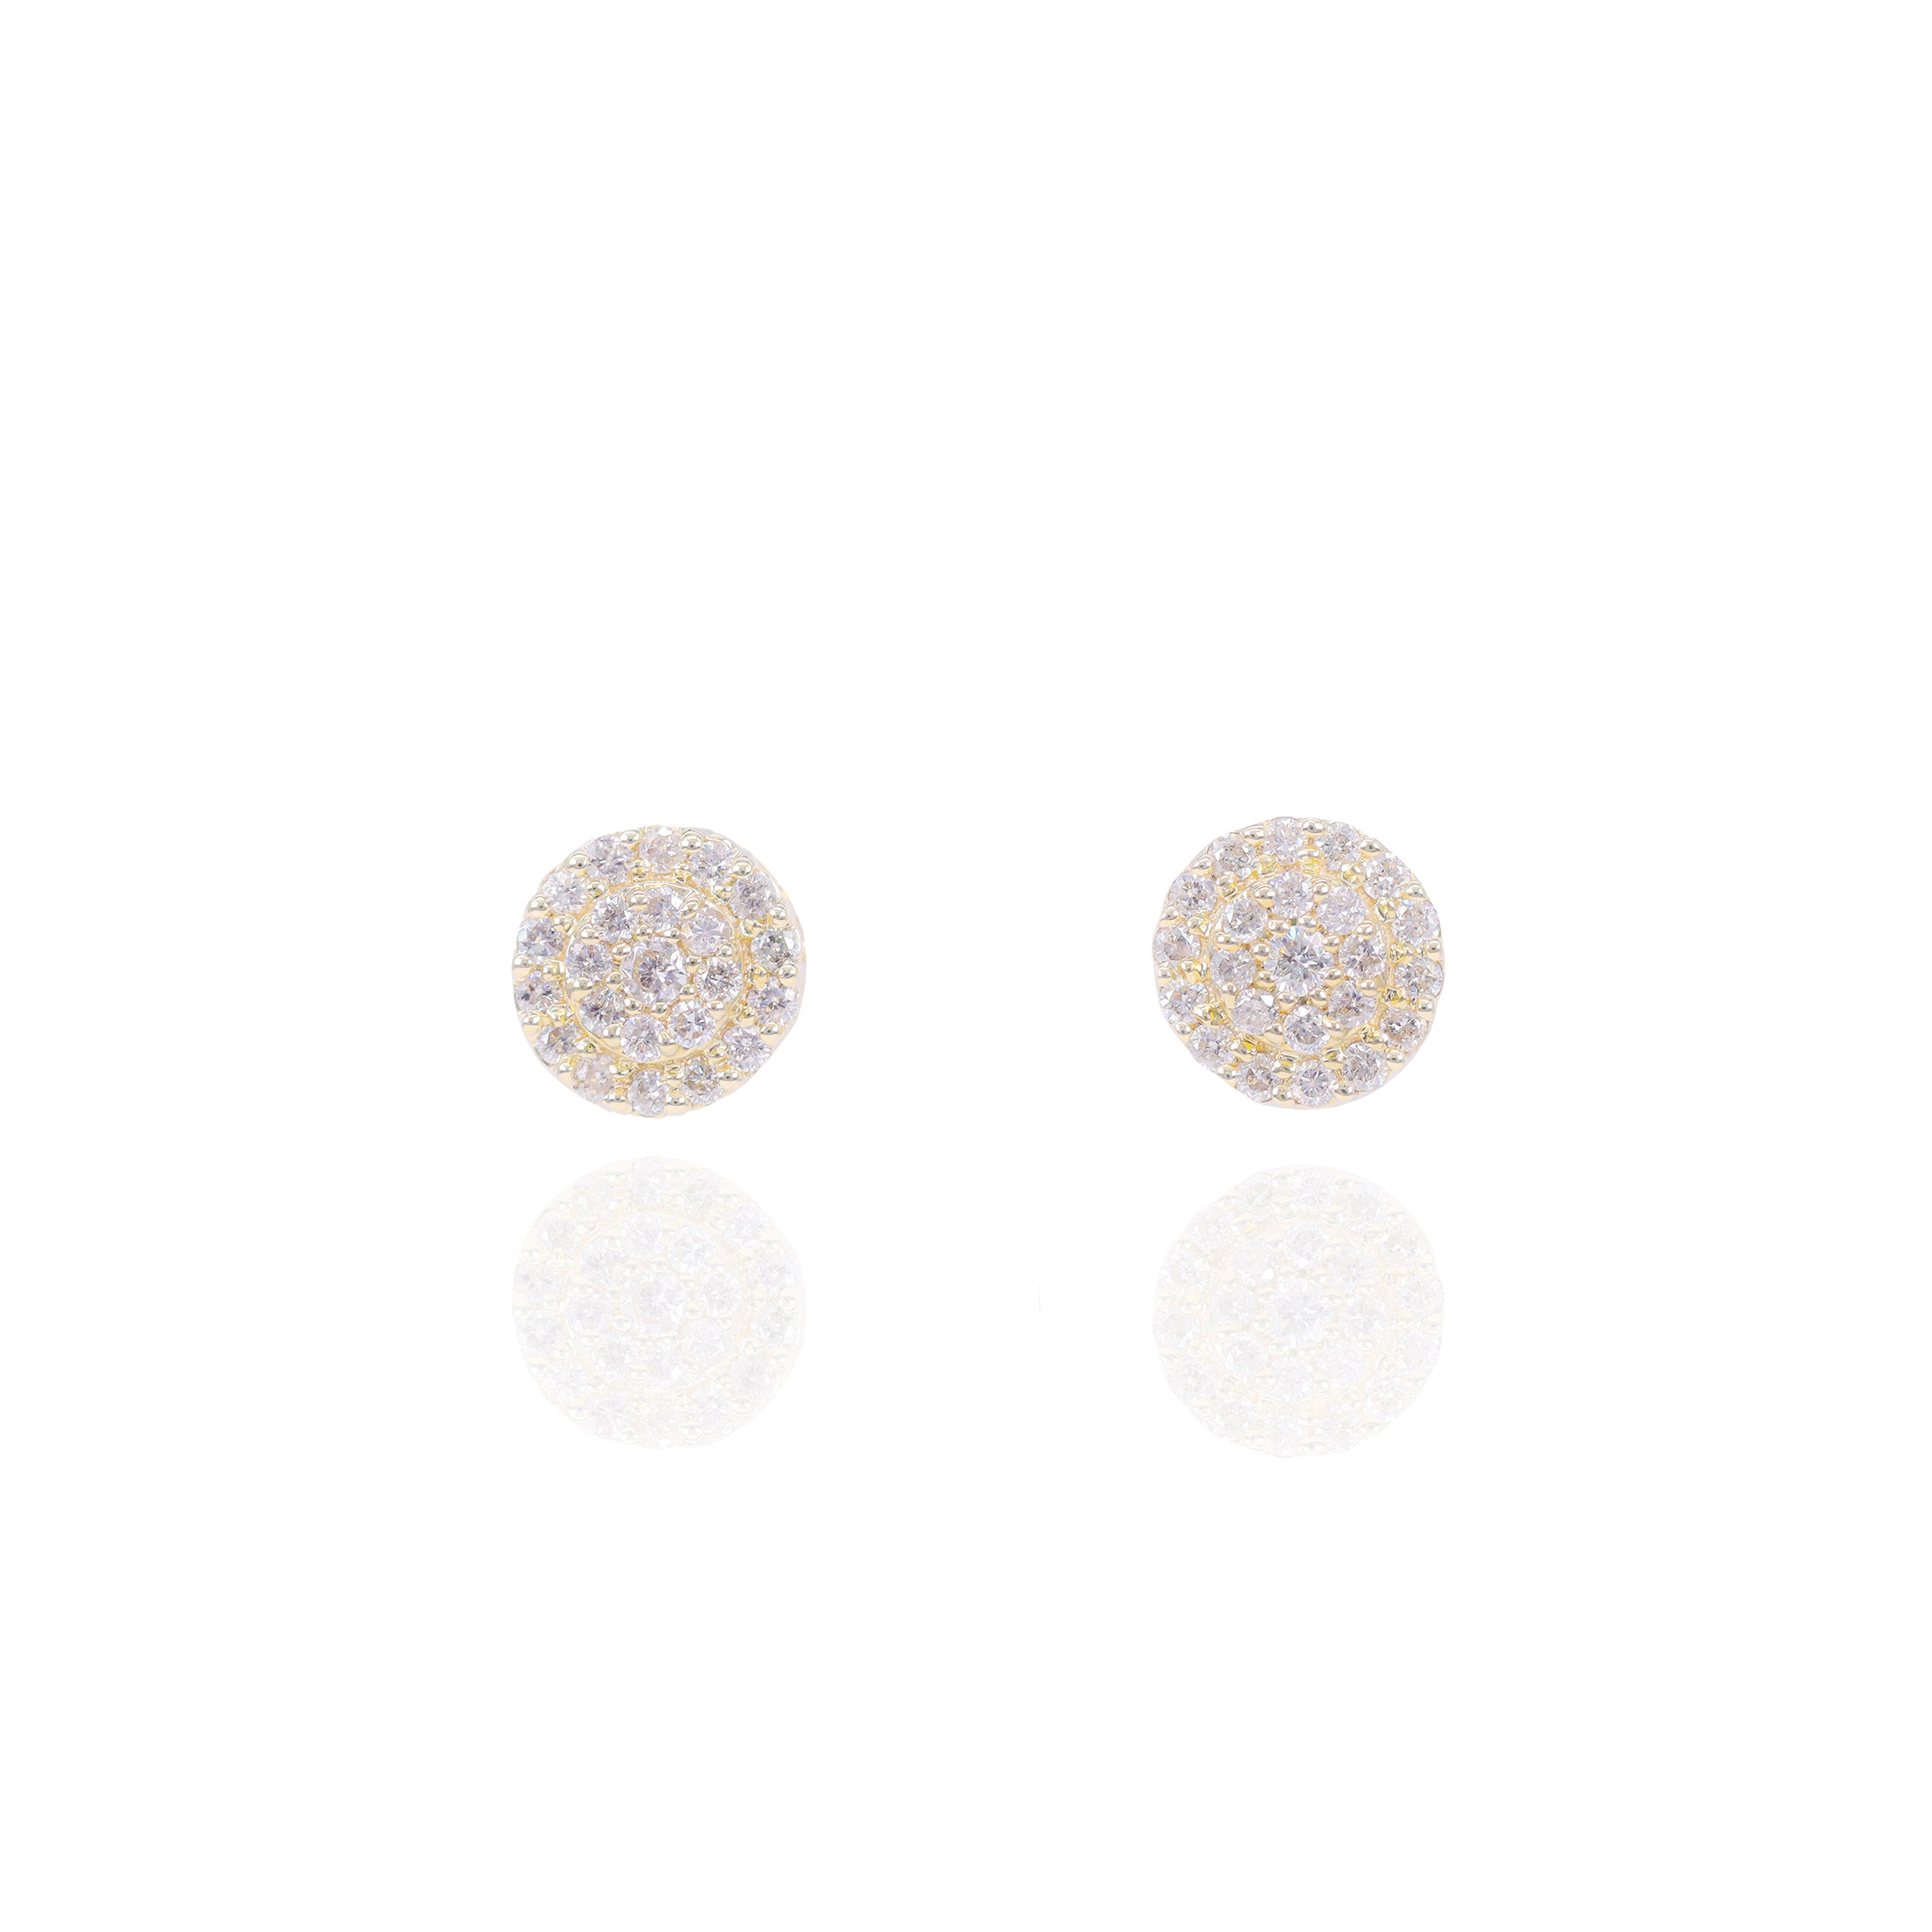 Round Cluster Diamond Earring